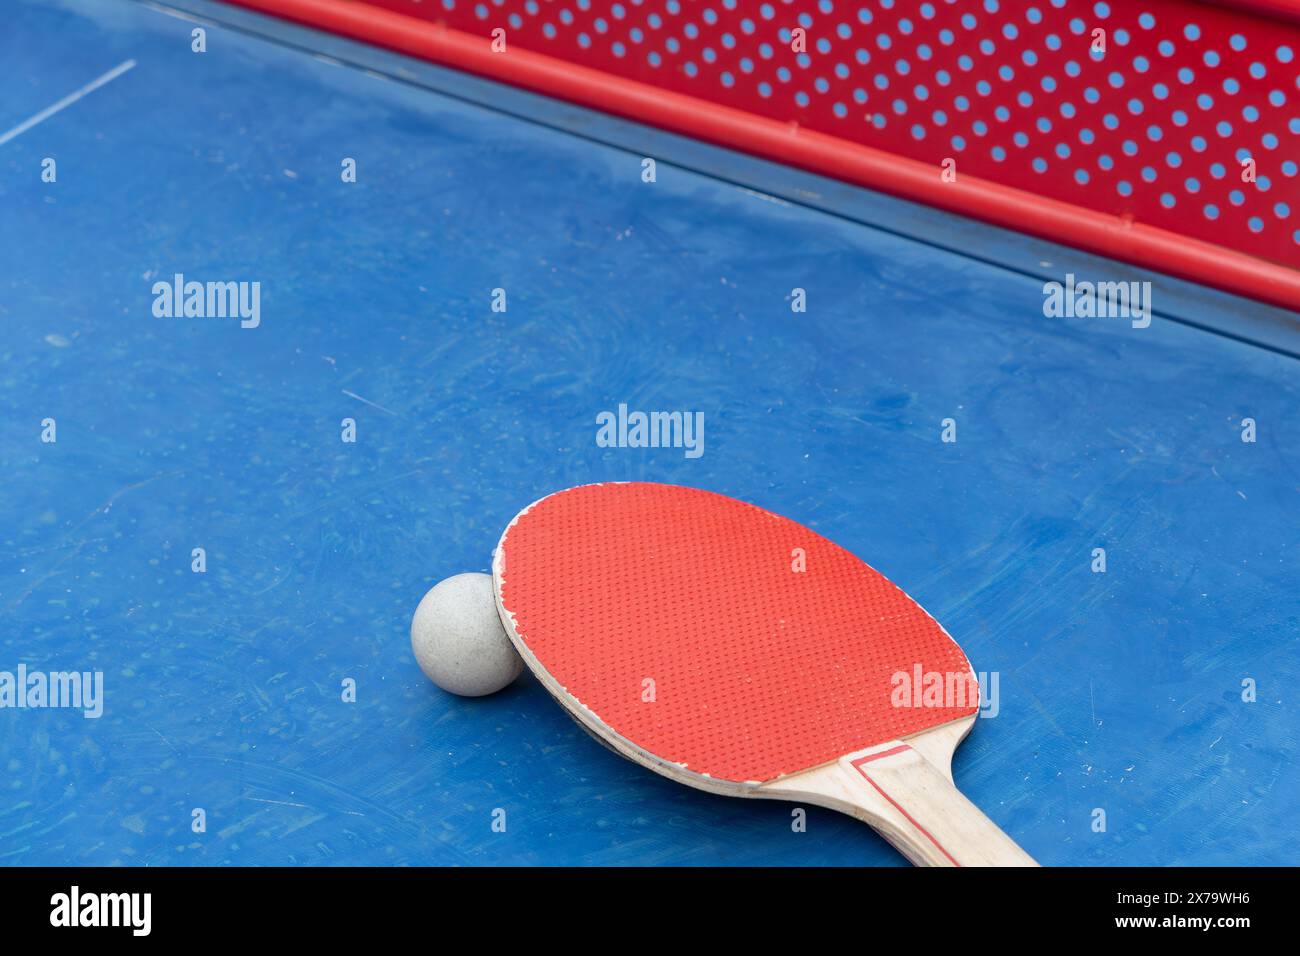 angle view pingpong racket and ball and net on a blue pingpong table at horizontal composition Stock Photo